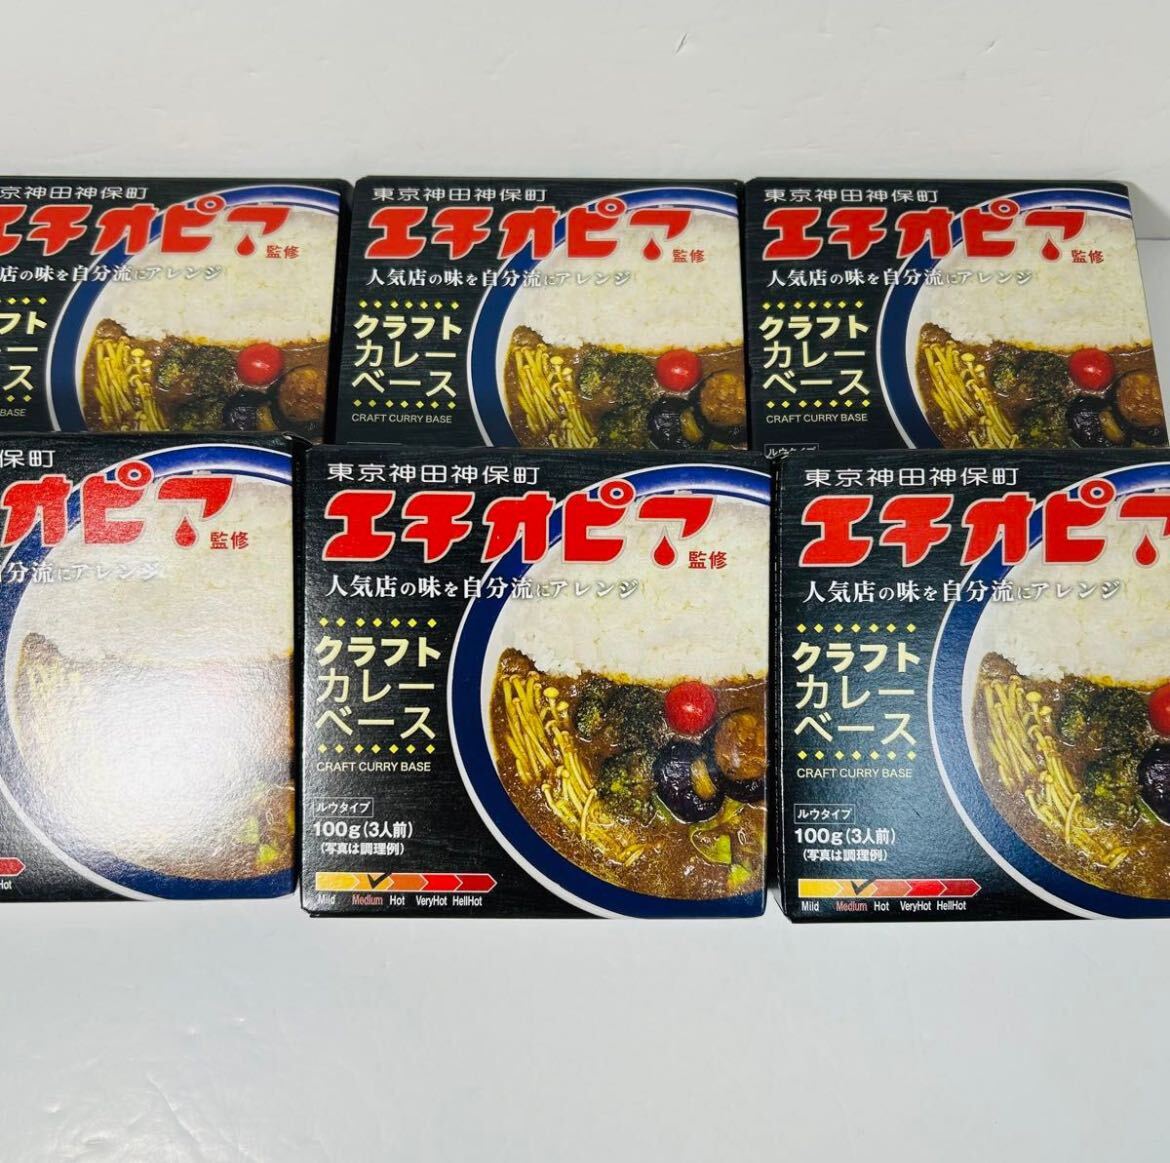 echio Piaa craft curry base 6 piece 